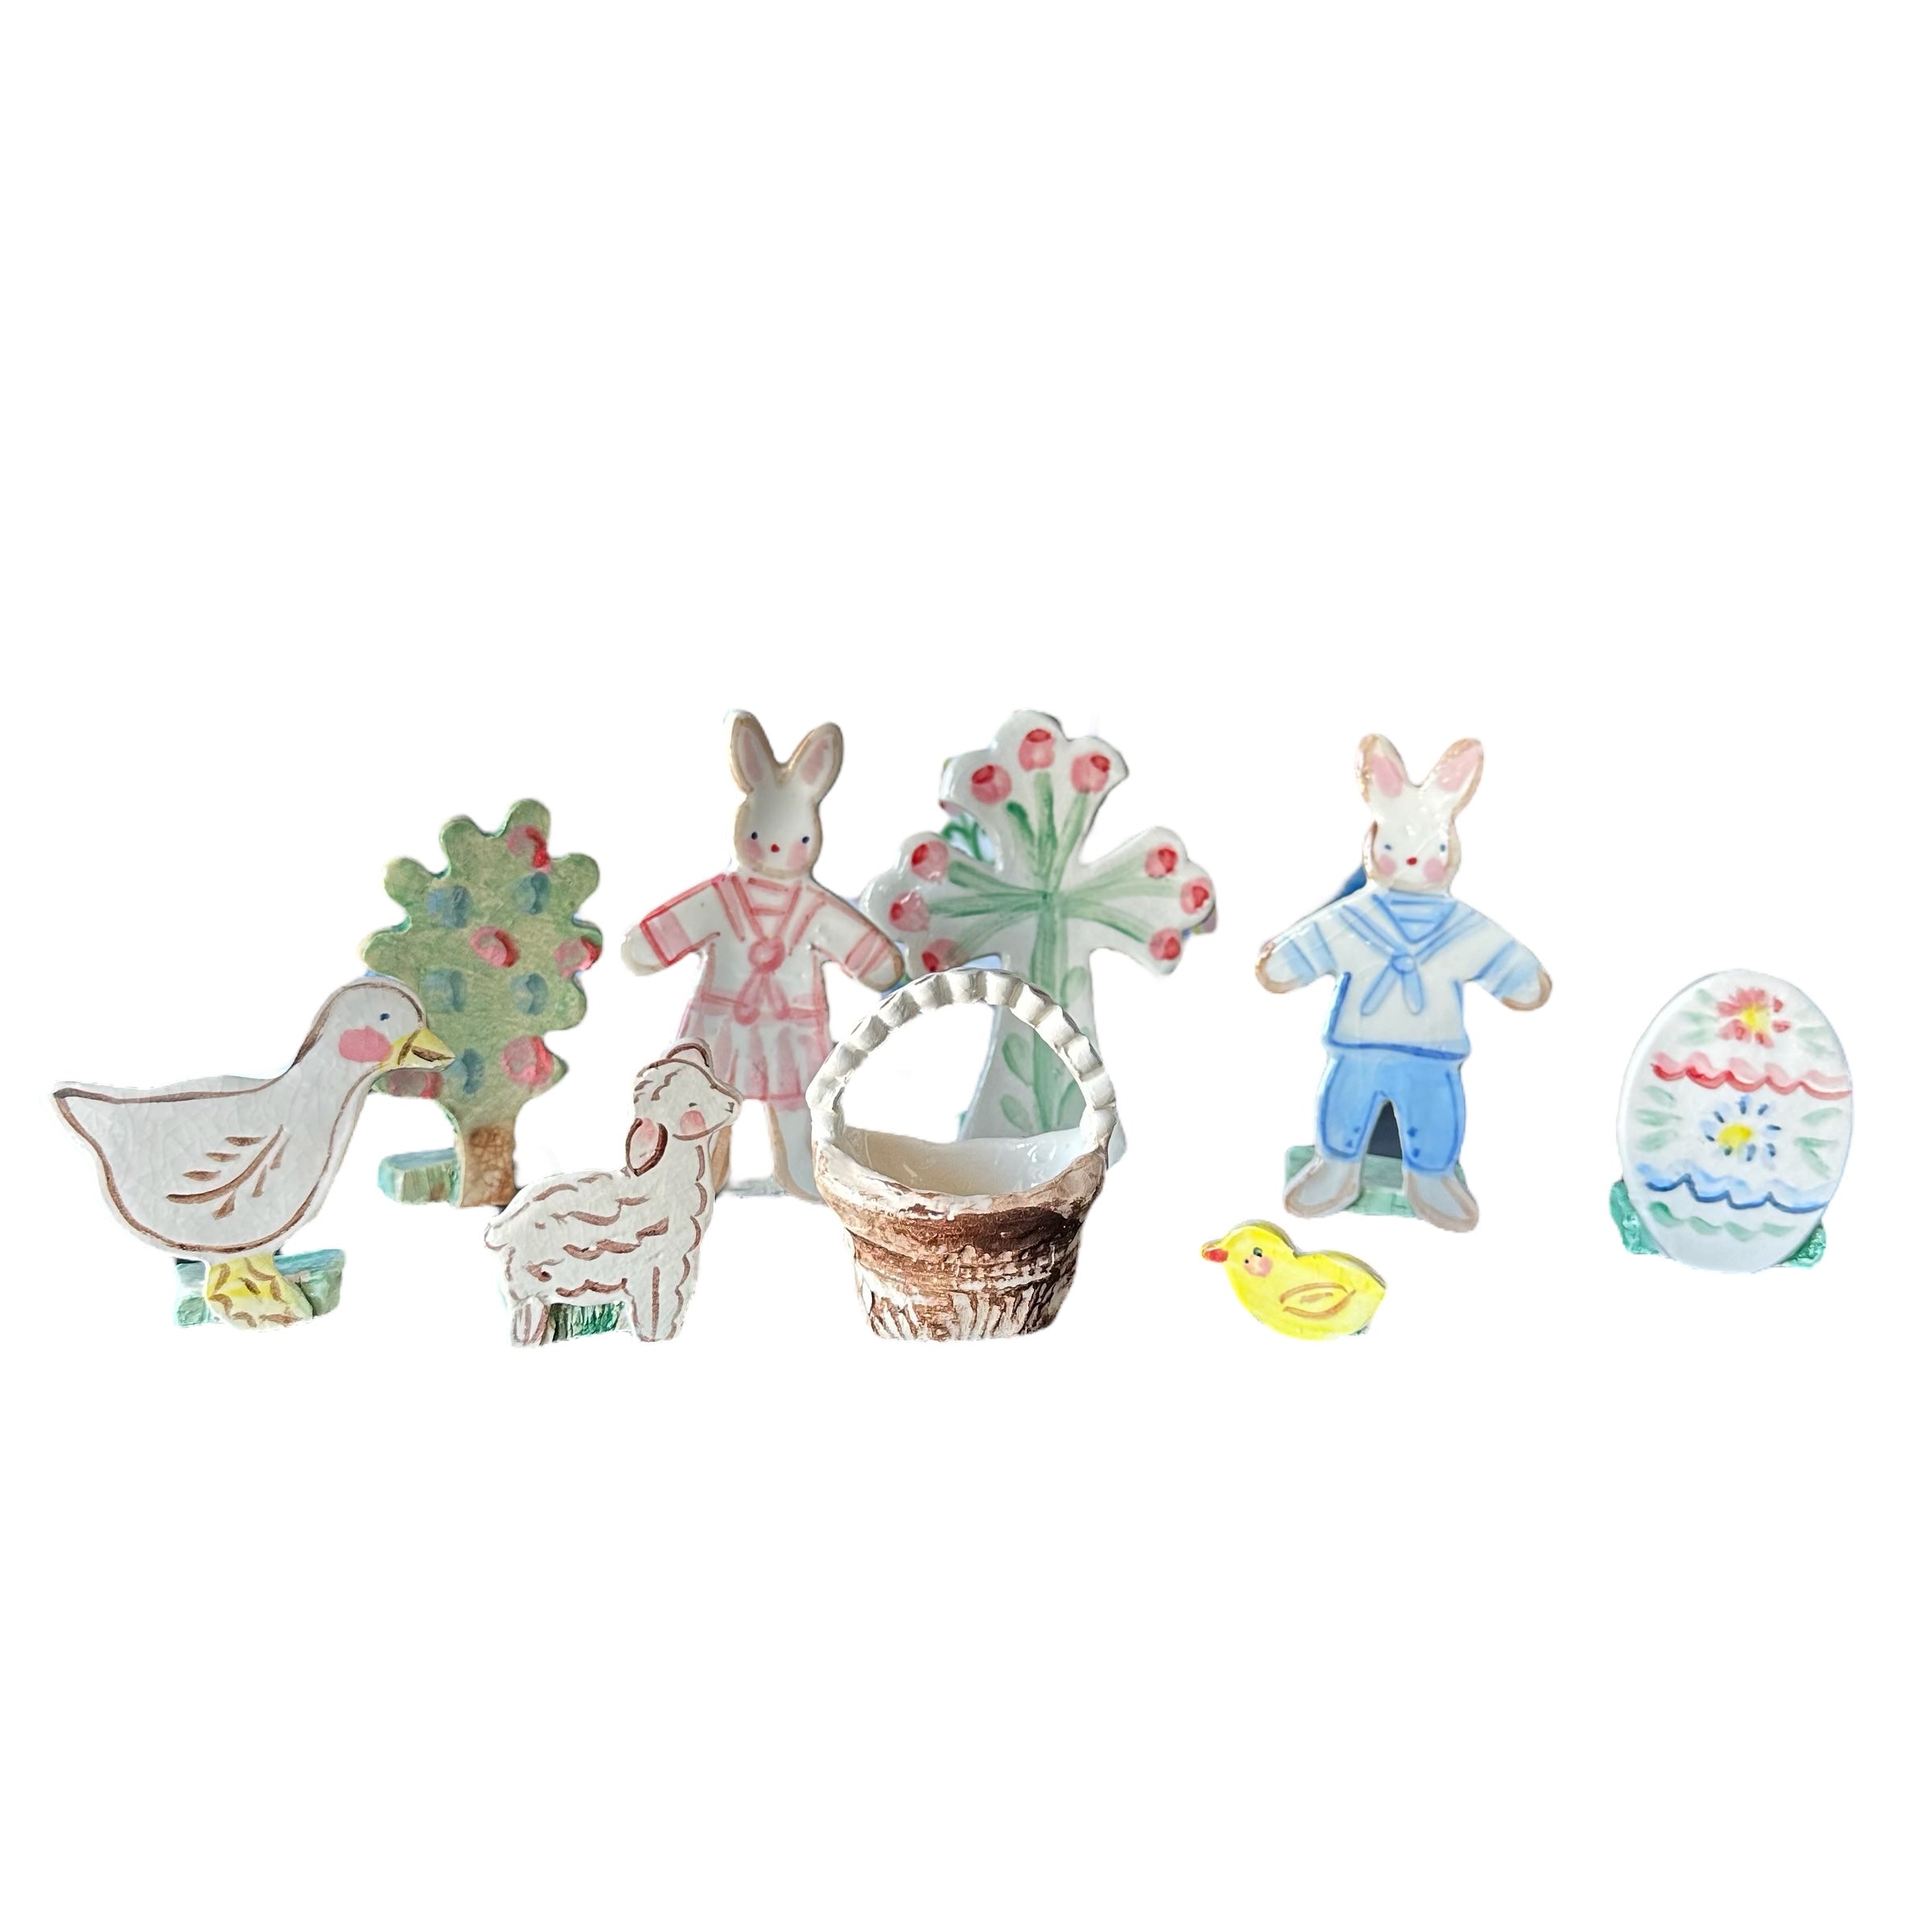 Easter Vignette - Premium Ceramic Figures from Tricia Lowenfield Design 